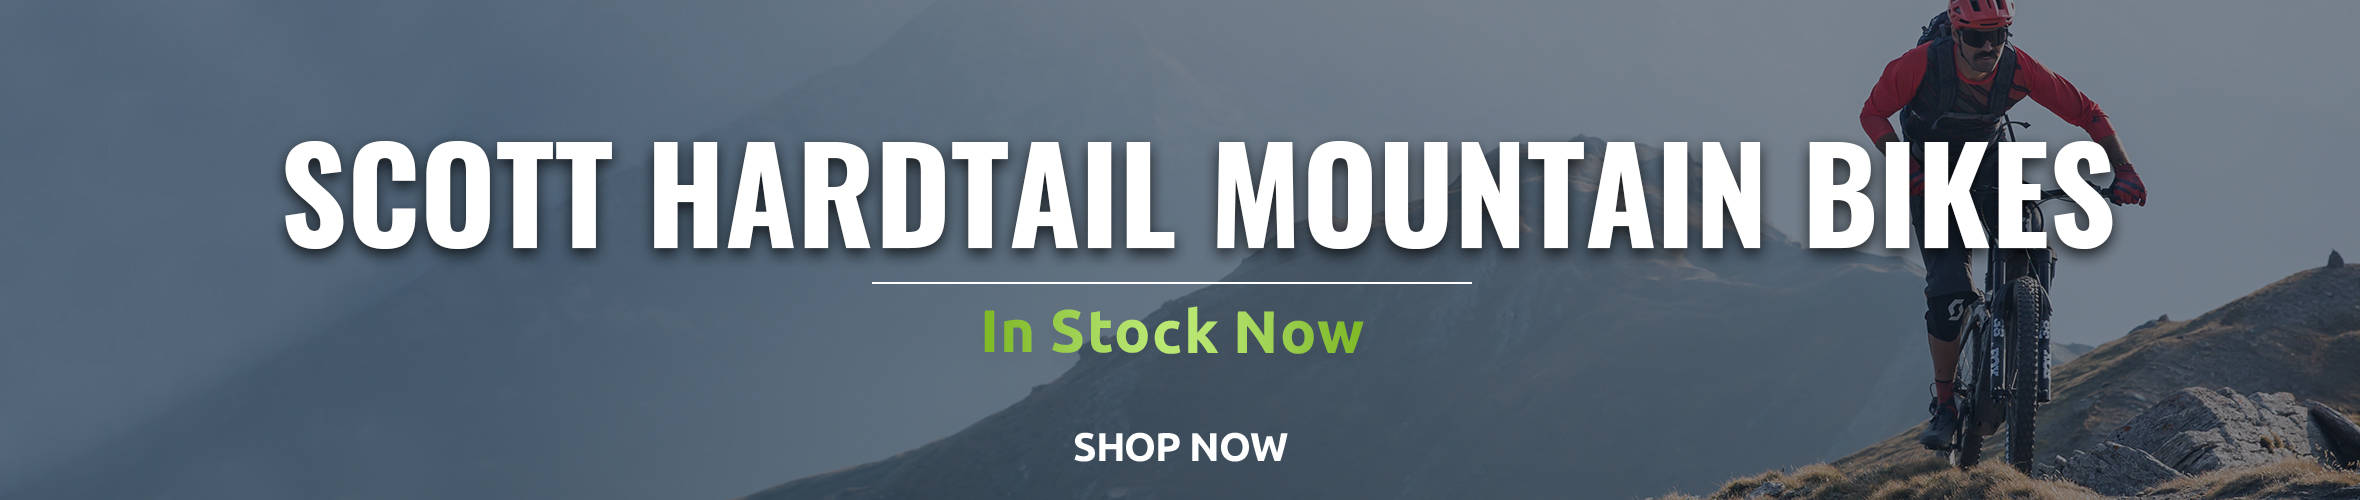 Scott Hardtail Mountain Bikes - In Stock Now